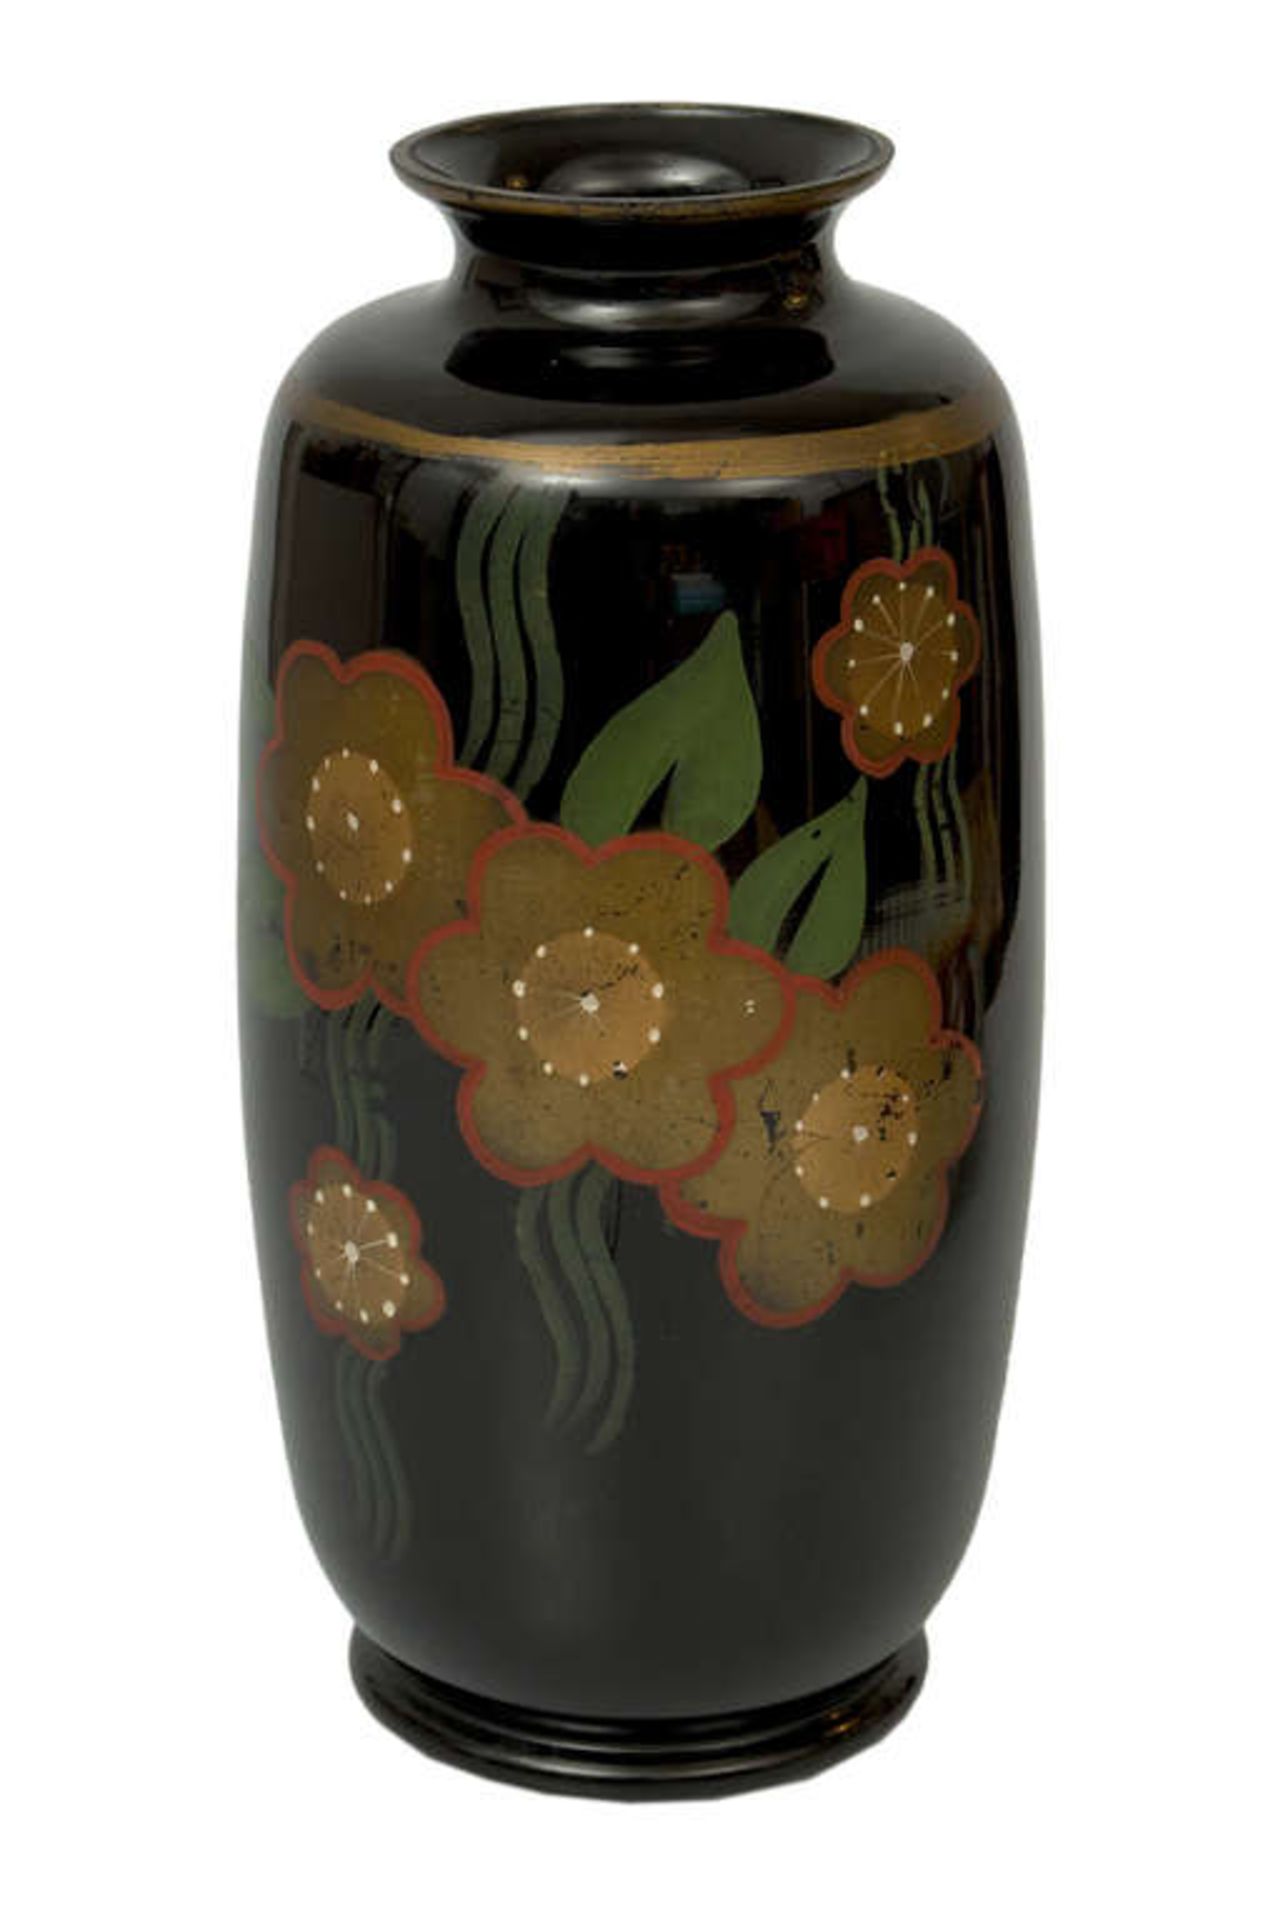 French art-deco style vase 